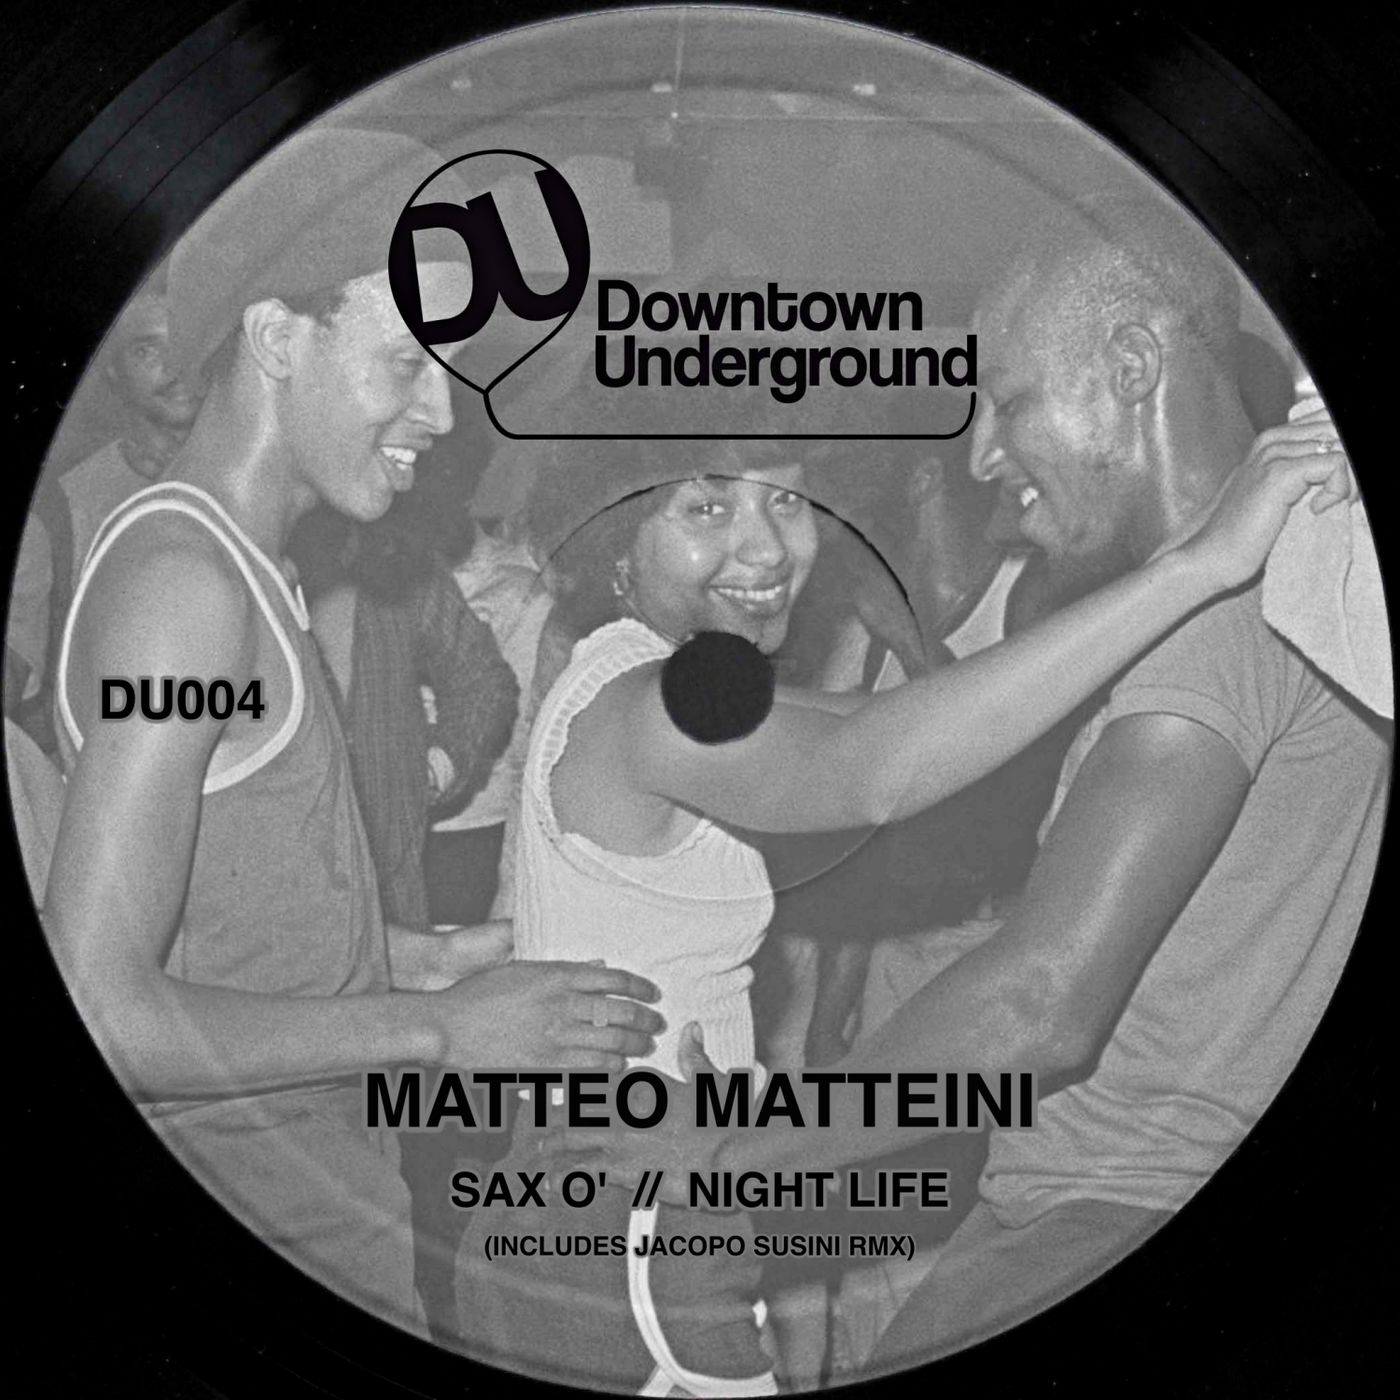 Matteo Matteini - Sax O' - Night Life / Downtown Underground